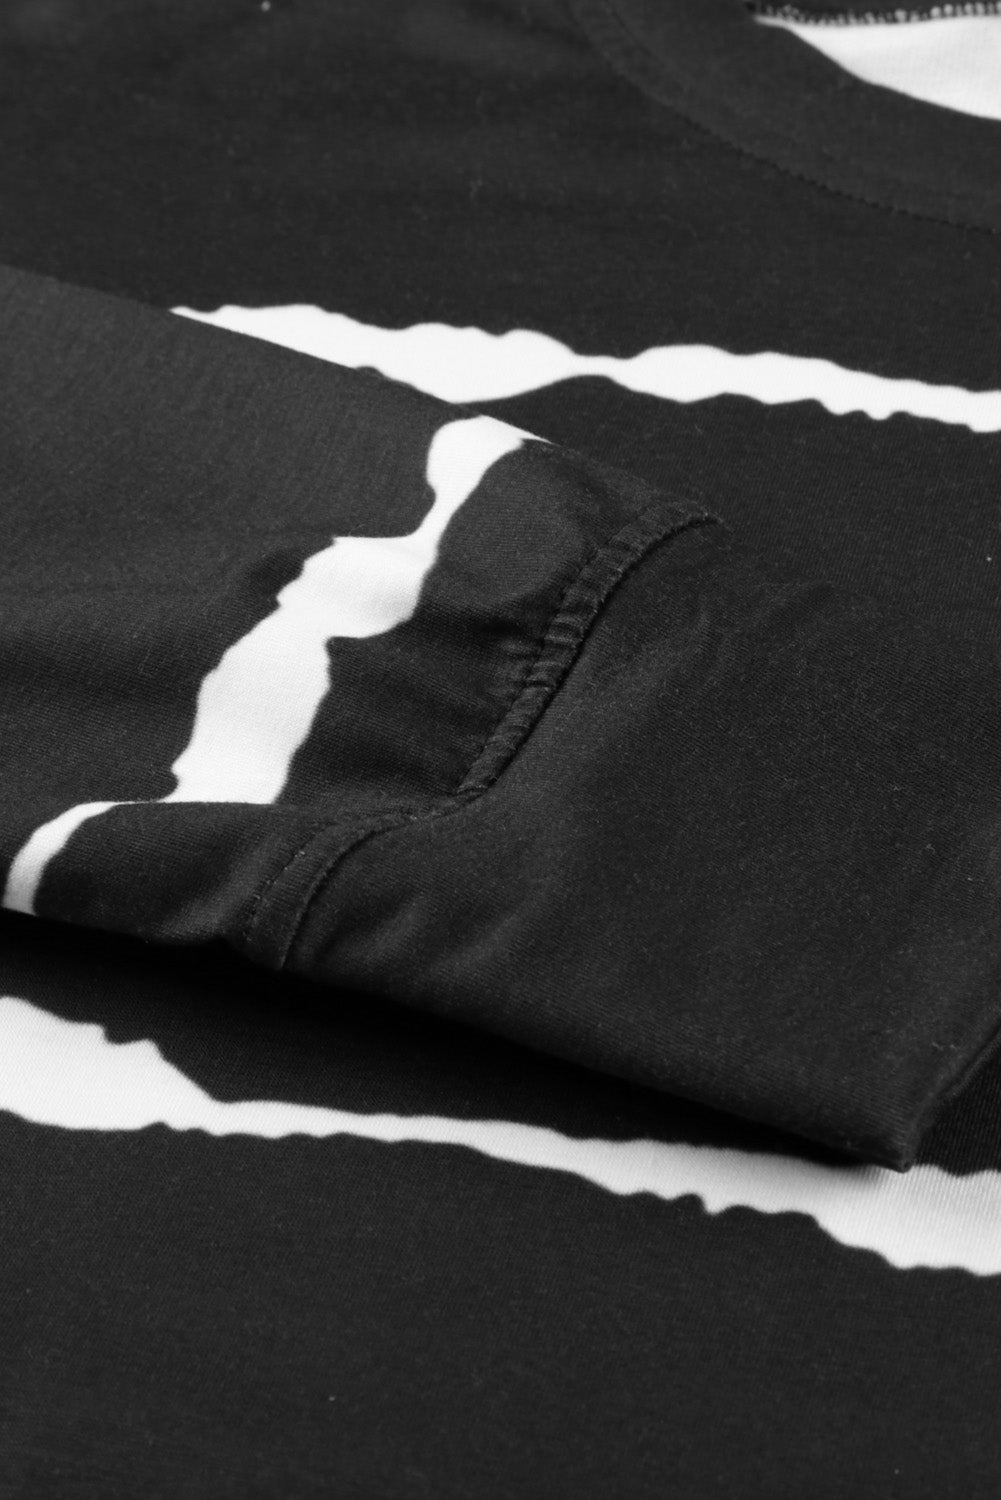 Black Striped Abstract Long Sleeve Casual Sweatshirt Sweatshirts & Hoodies JT's Designer Fashion